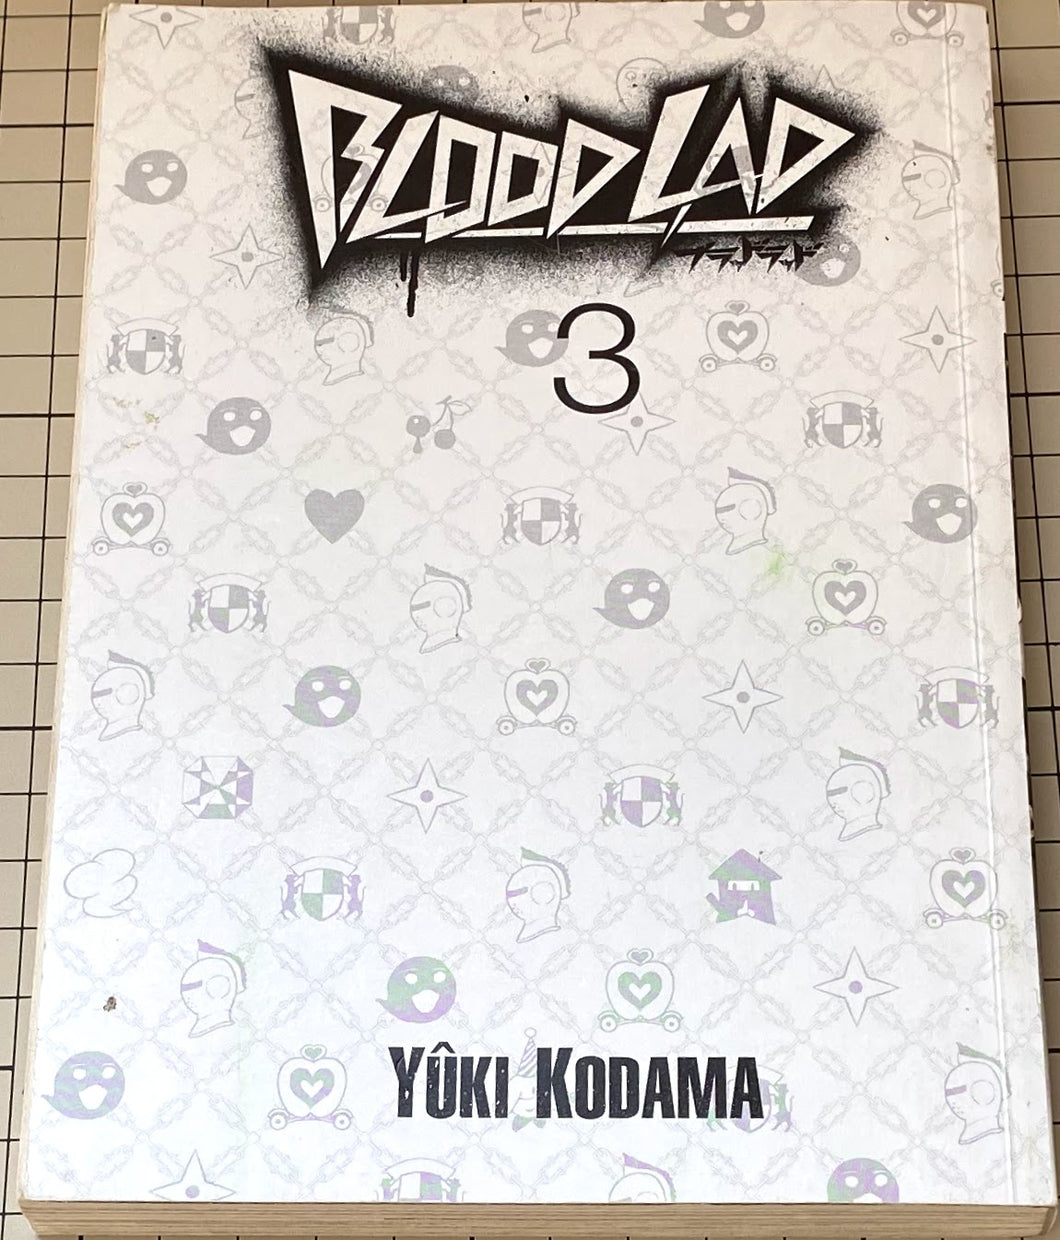 Blood lad. 3 : Yuki Kodama